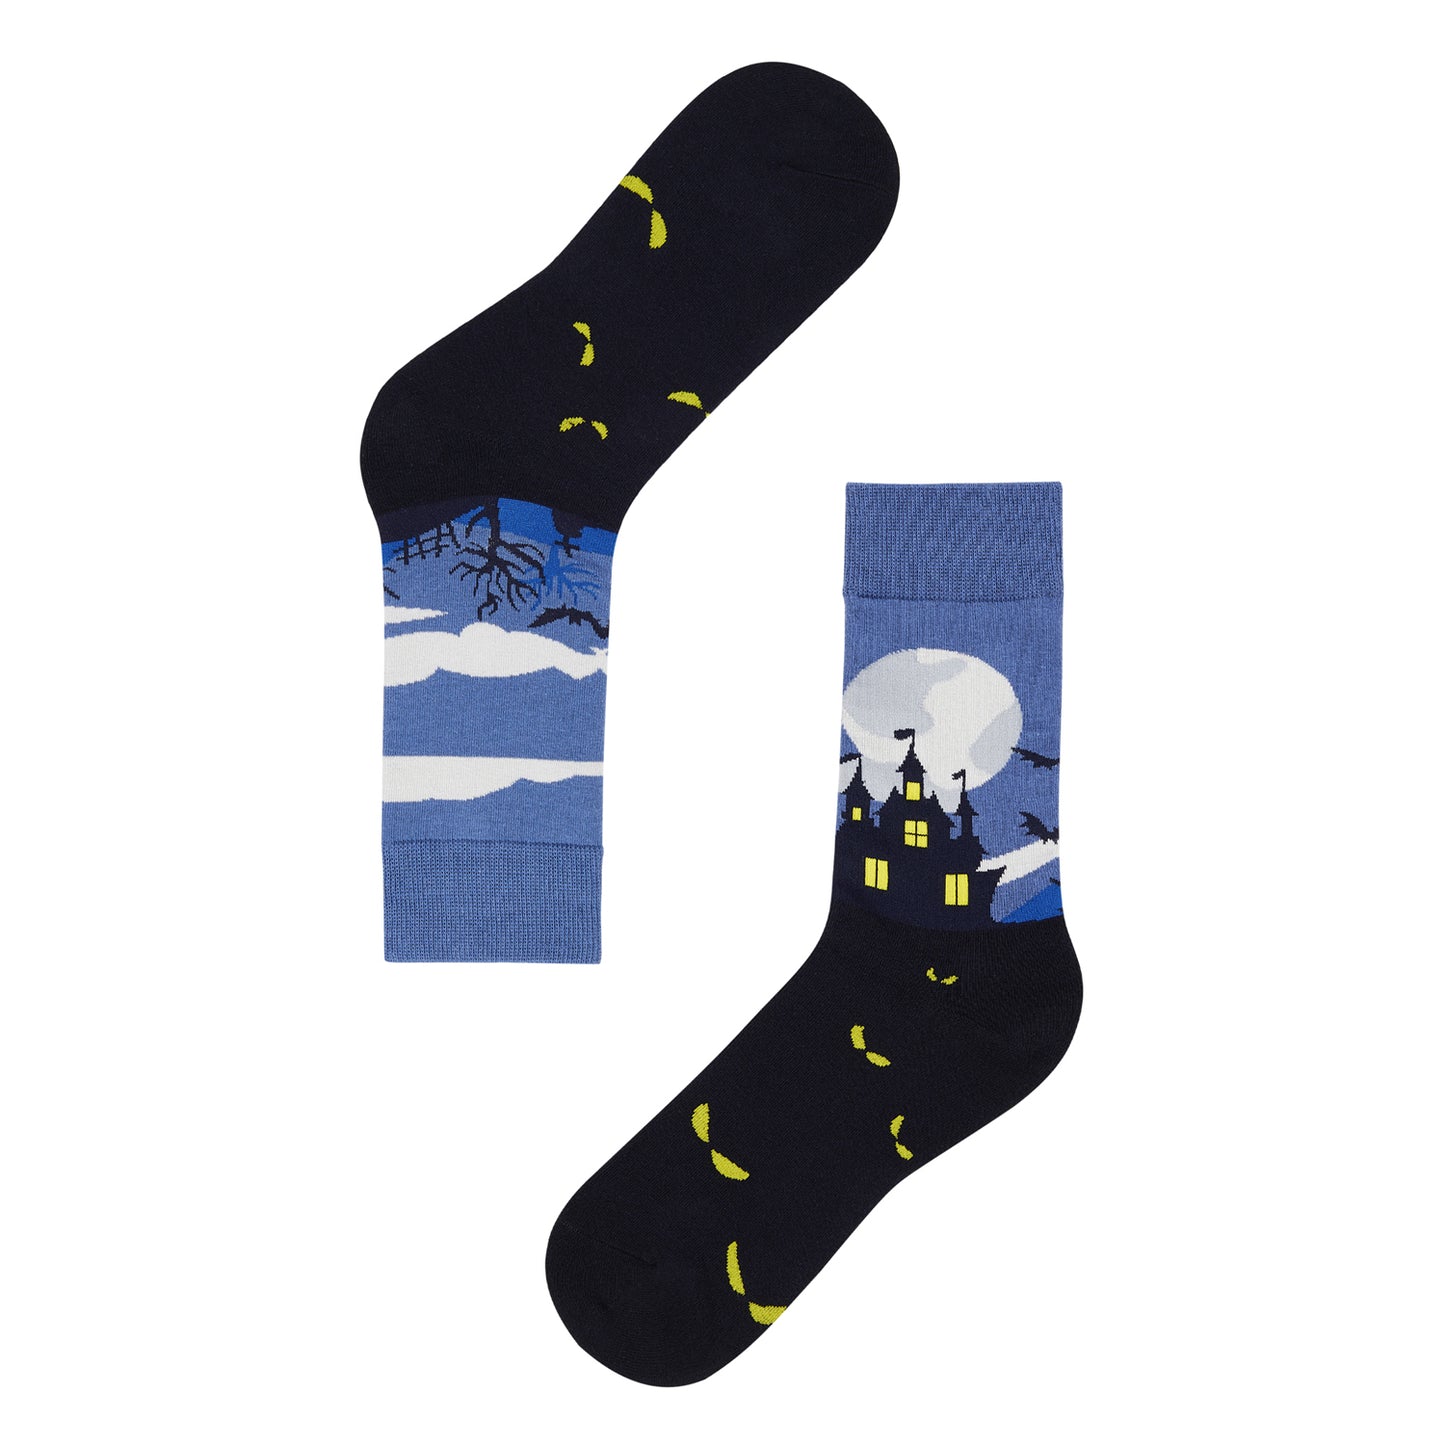 Spooky Nights Printed Crew Length Socks - IDENTITY Apparel Shop